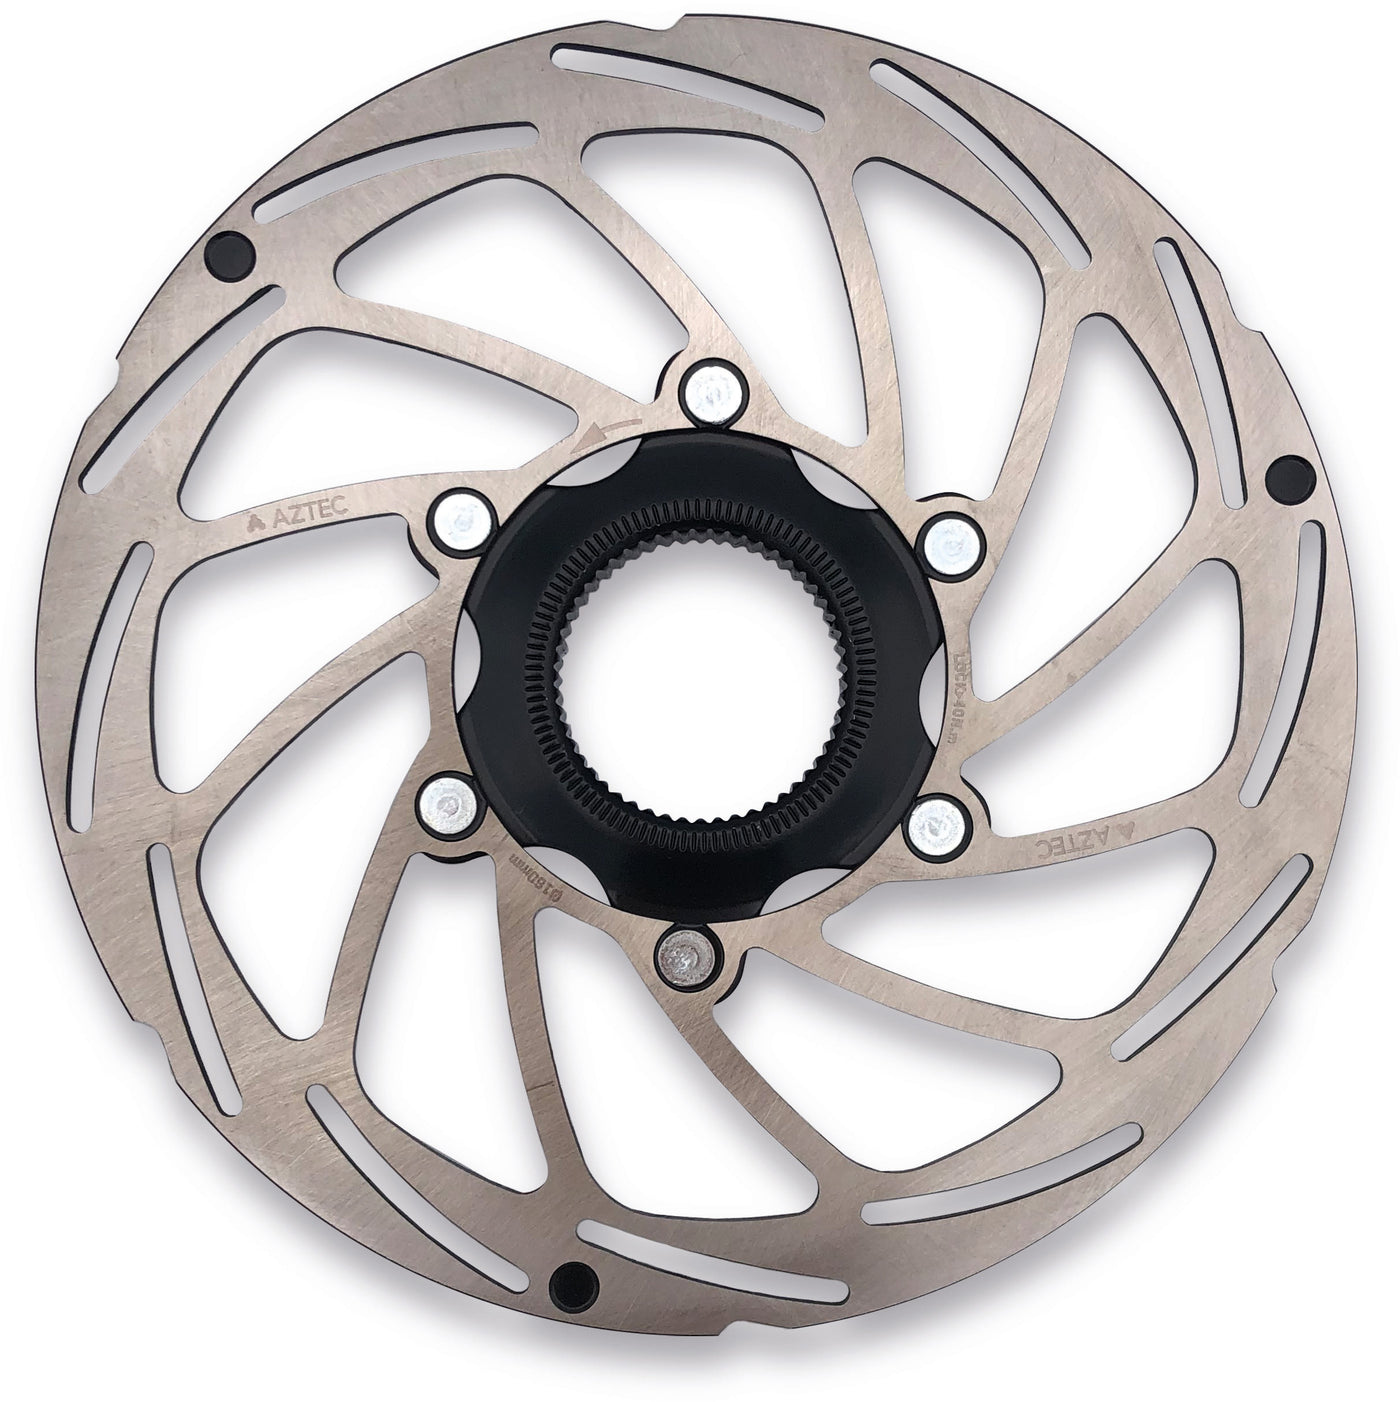 Centre-Lock disc Brake rotor 160 mm